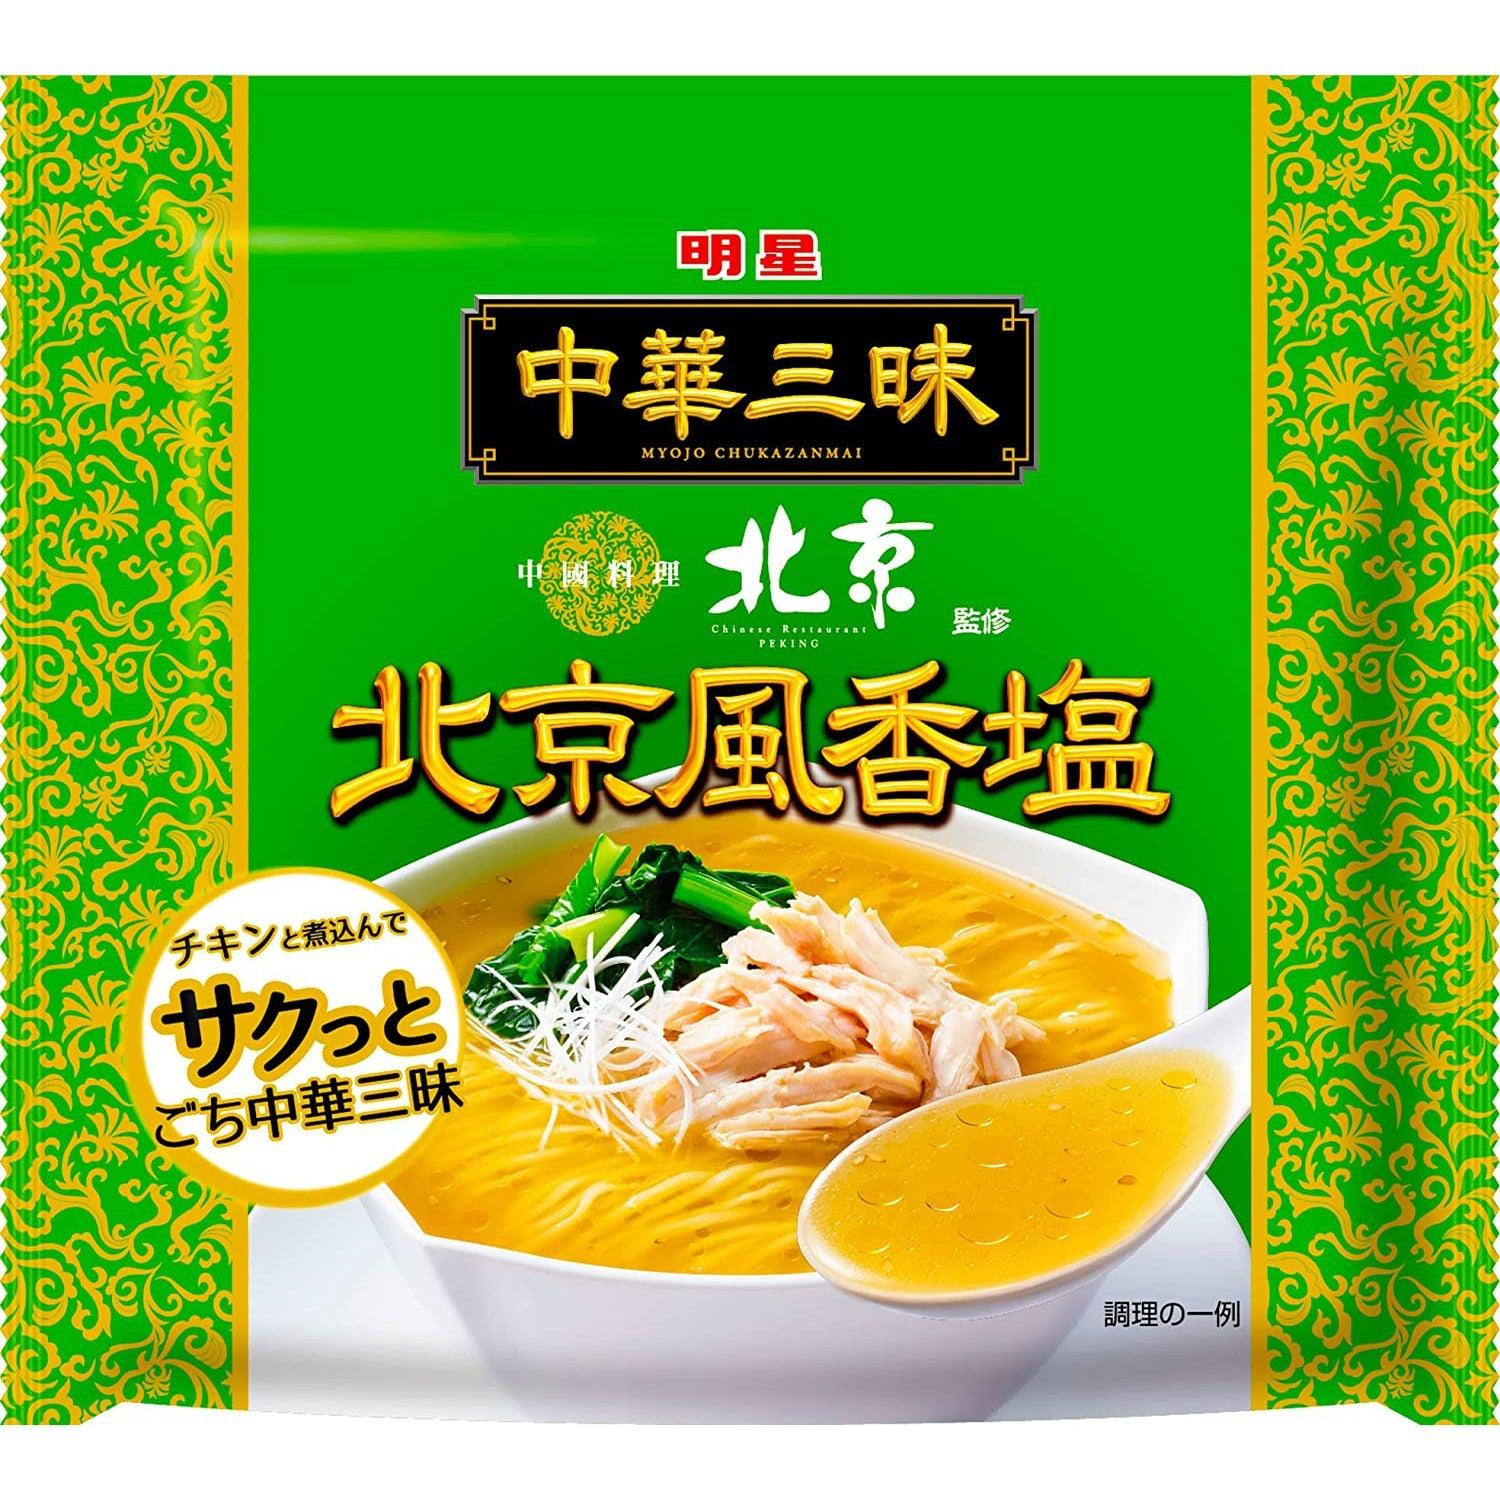 Myojo Ippeichan Chukazanmai Beijing Style Shio Ramen Instant Noodles 103g (Pack of 3)